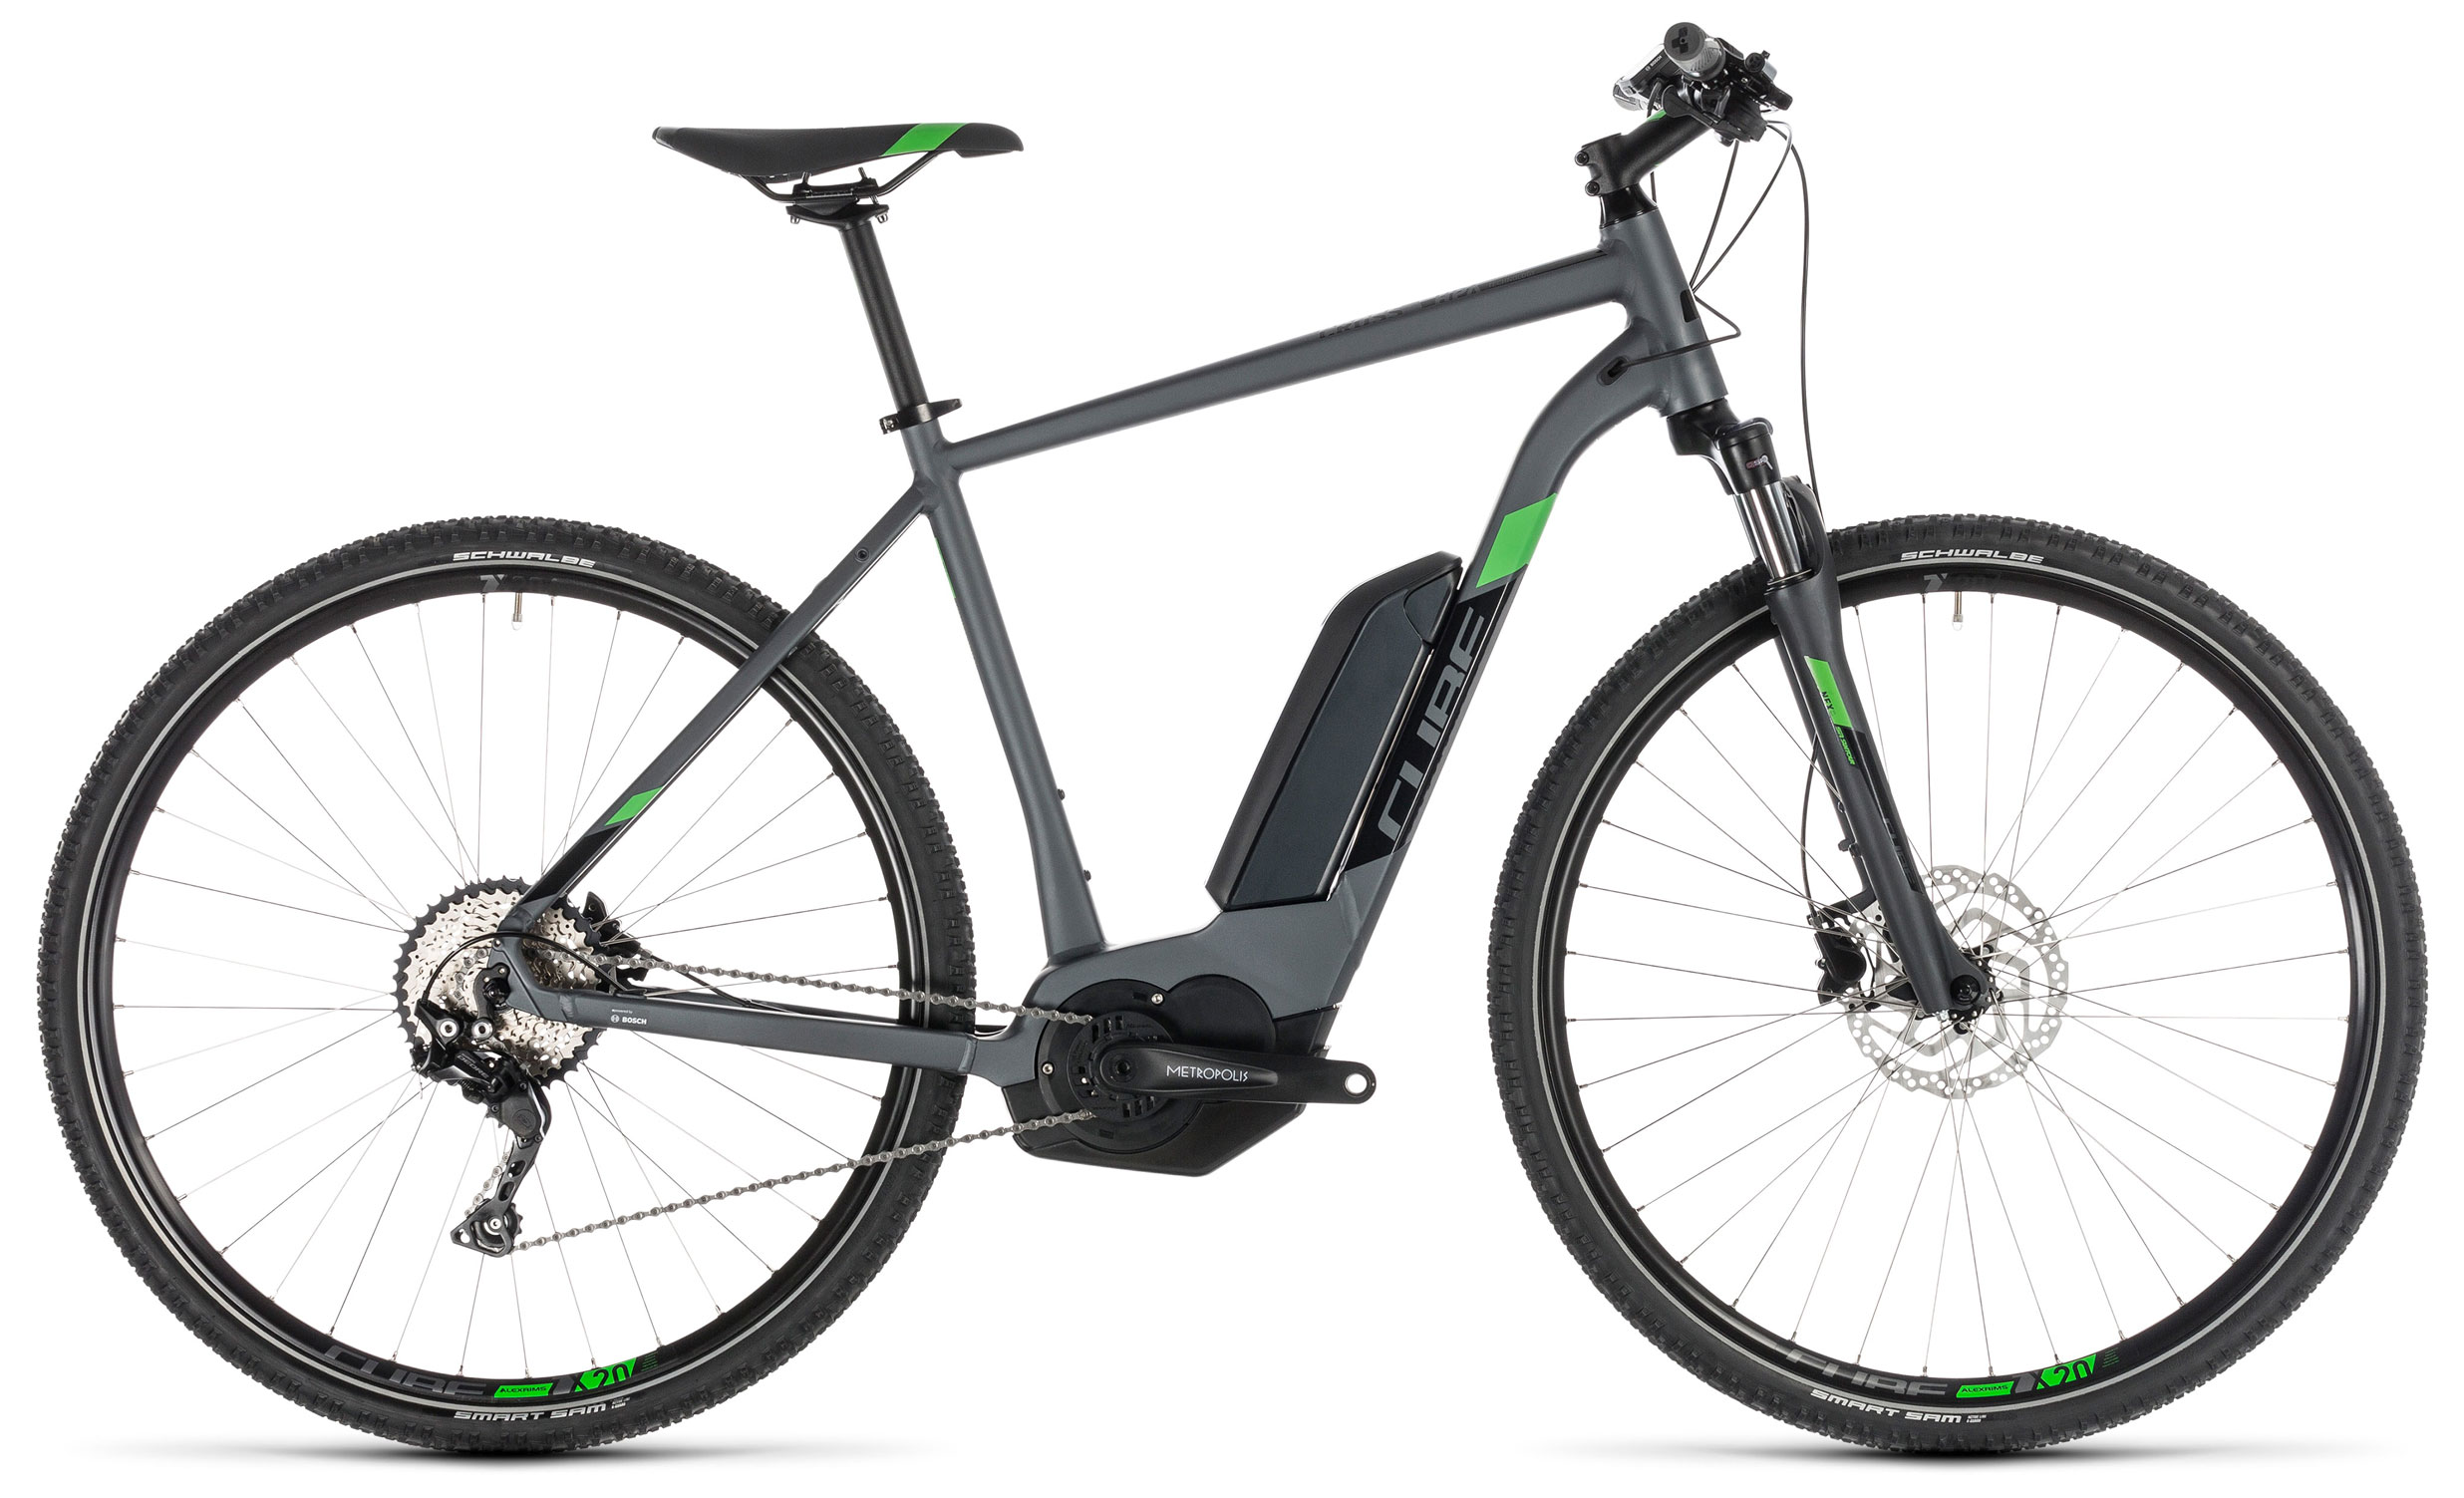  Отзывы о Электровелосипеде Cube Cross Hybrid Pro 500 2019